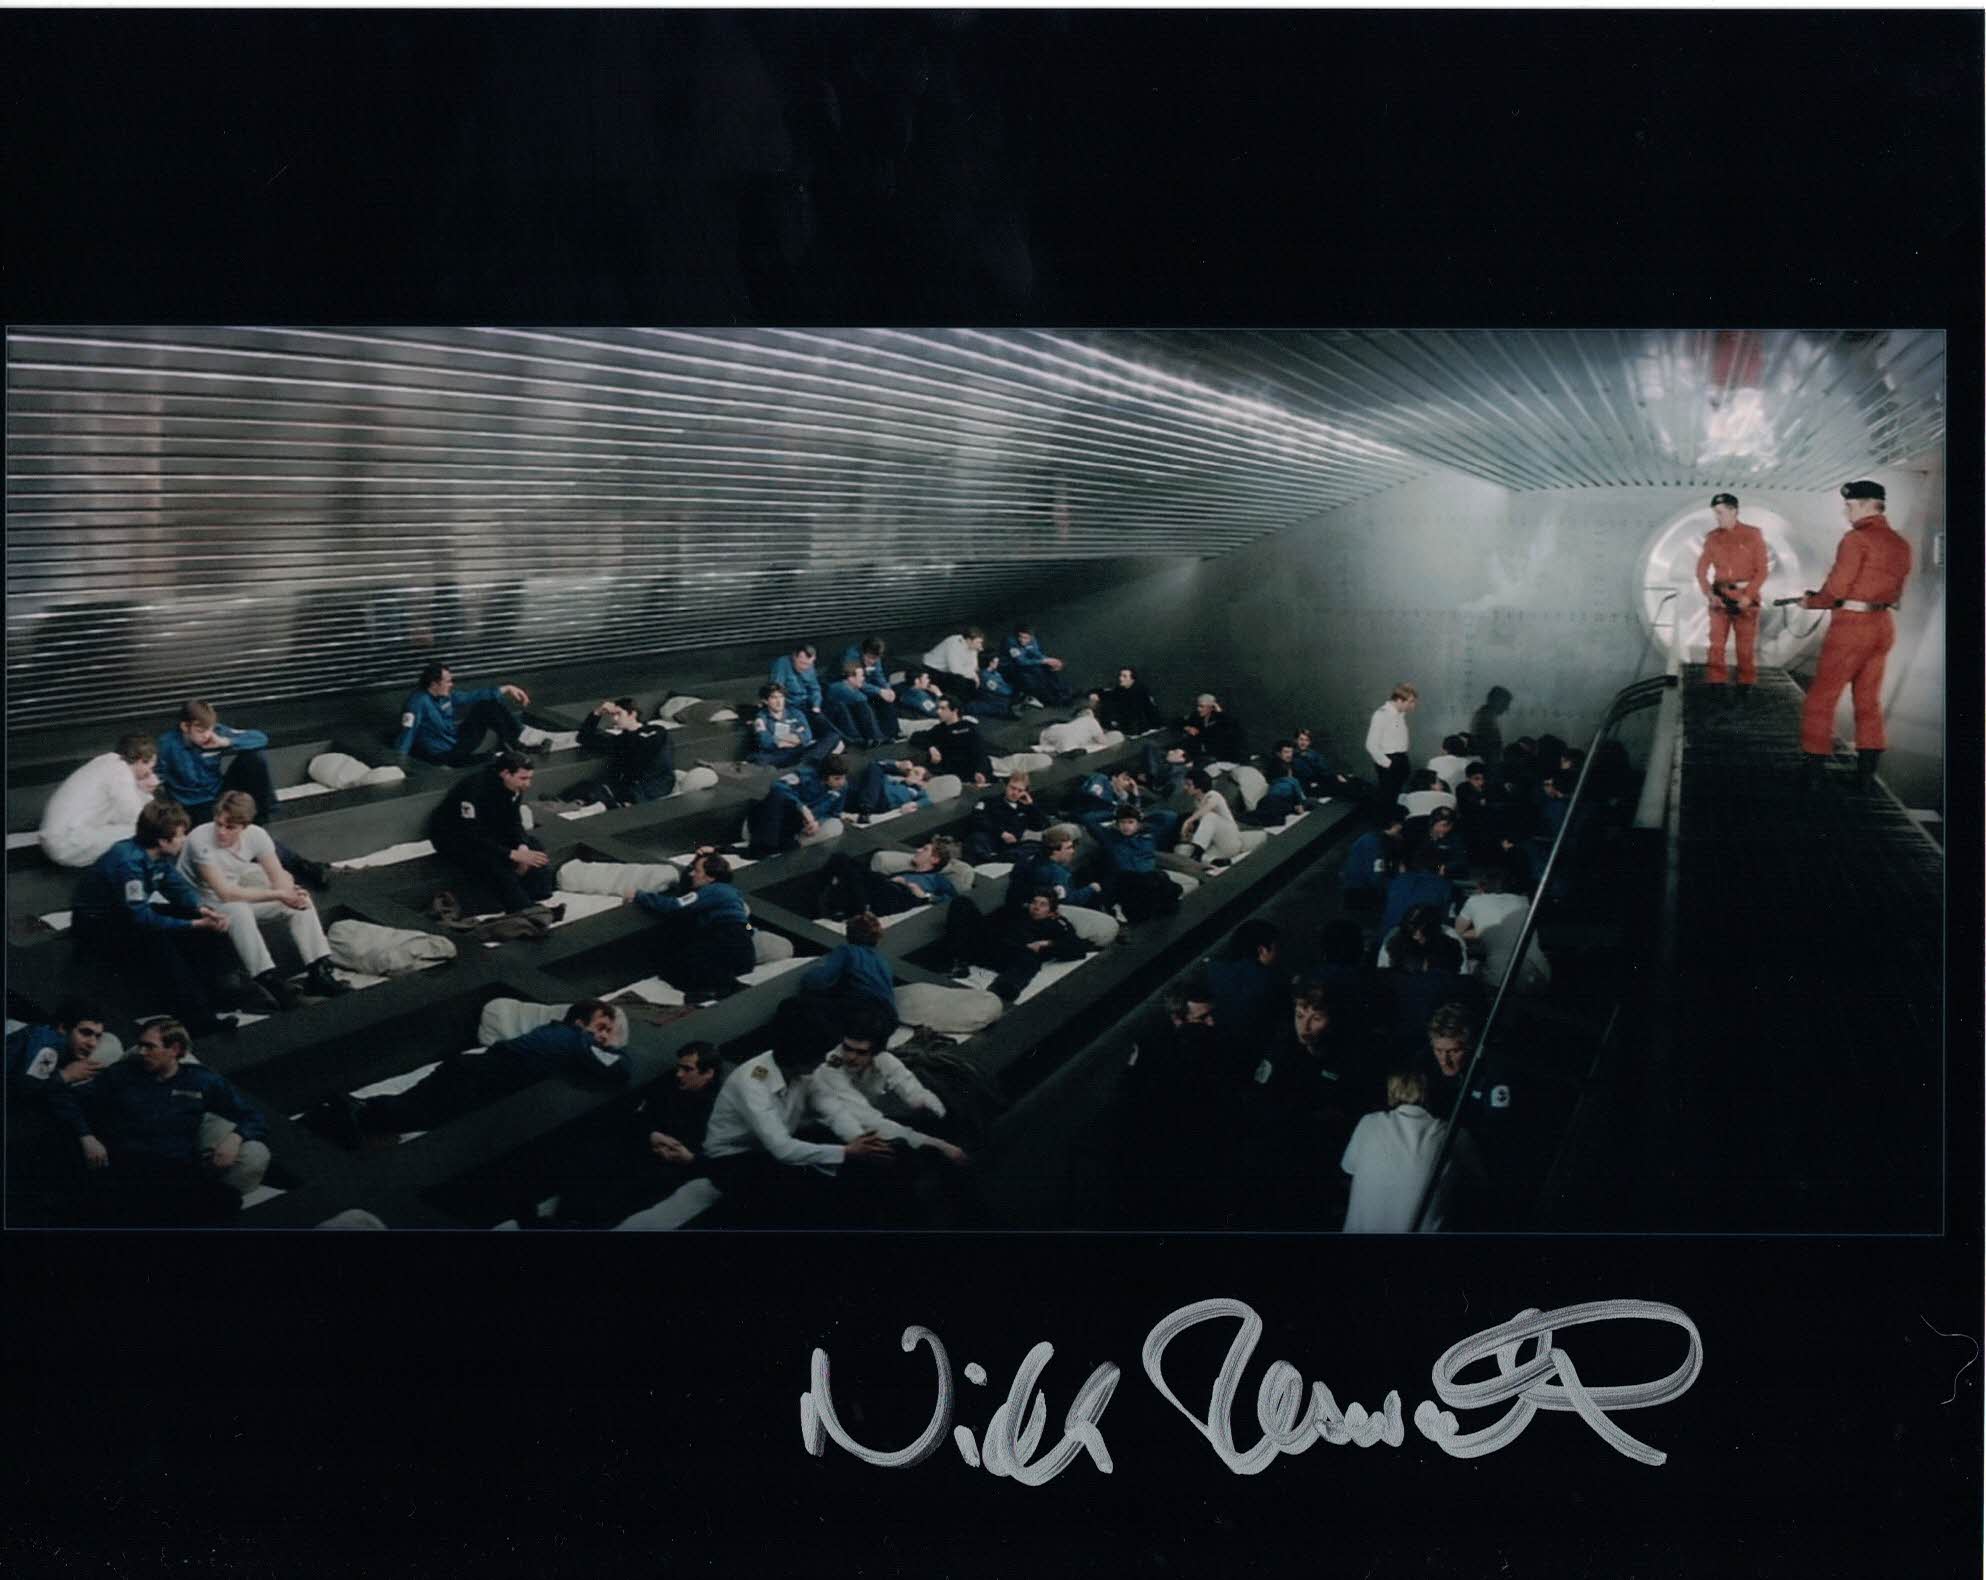 NICK ELLSWORTH - HMS Ranger Crew on The Spy Who Loved Me - James Bond hand signed 10 x 8 photo